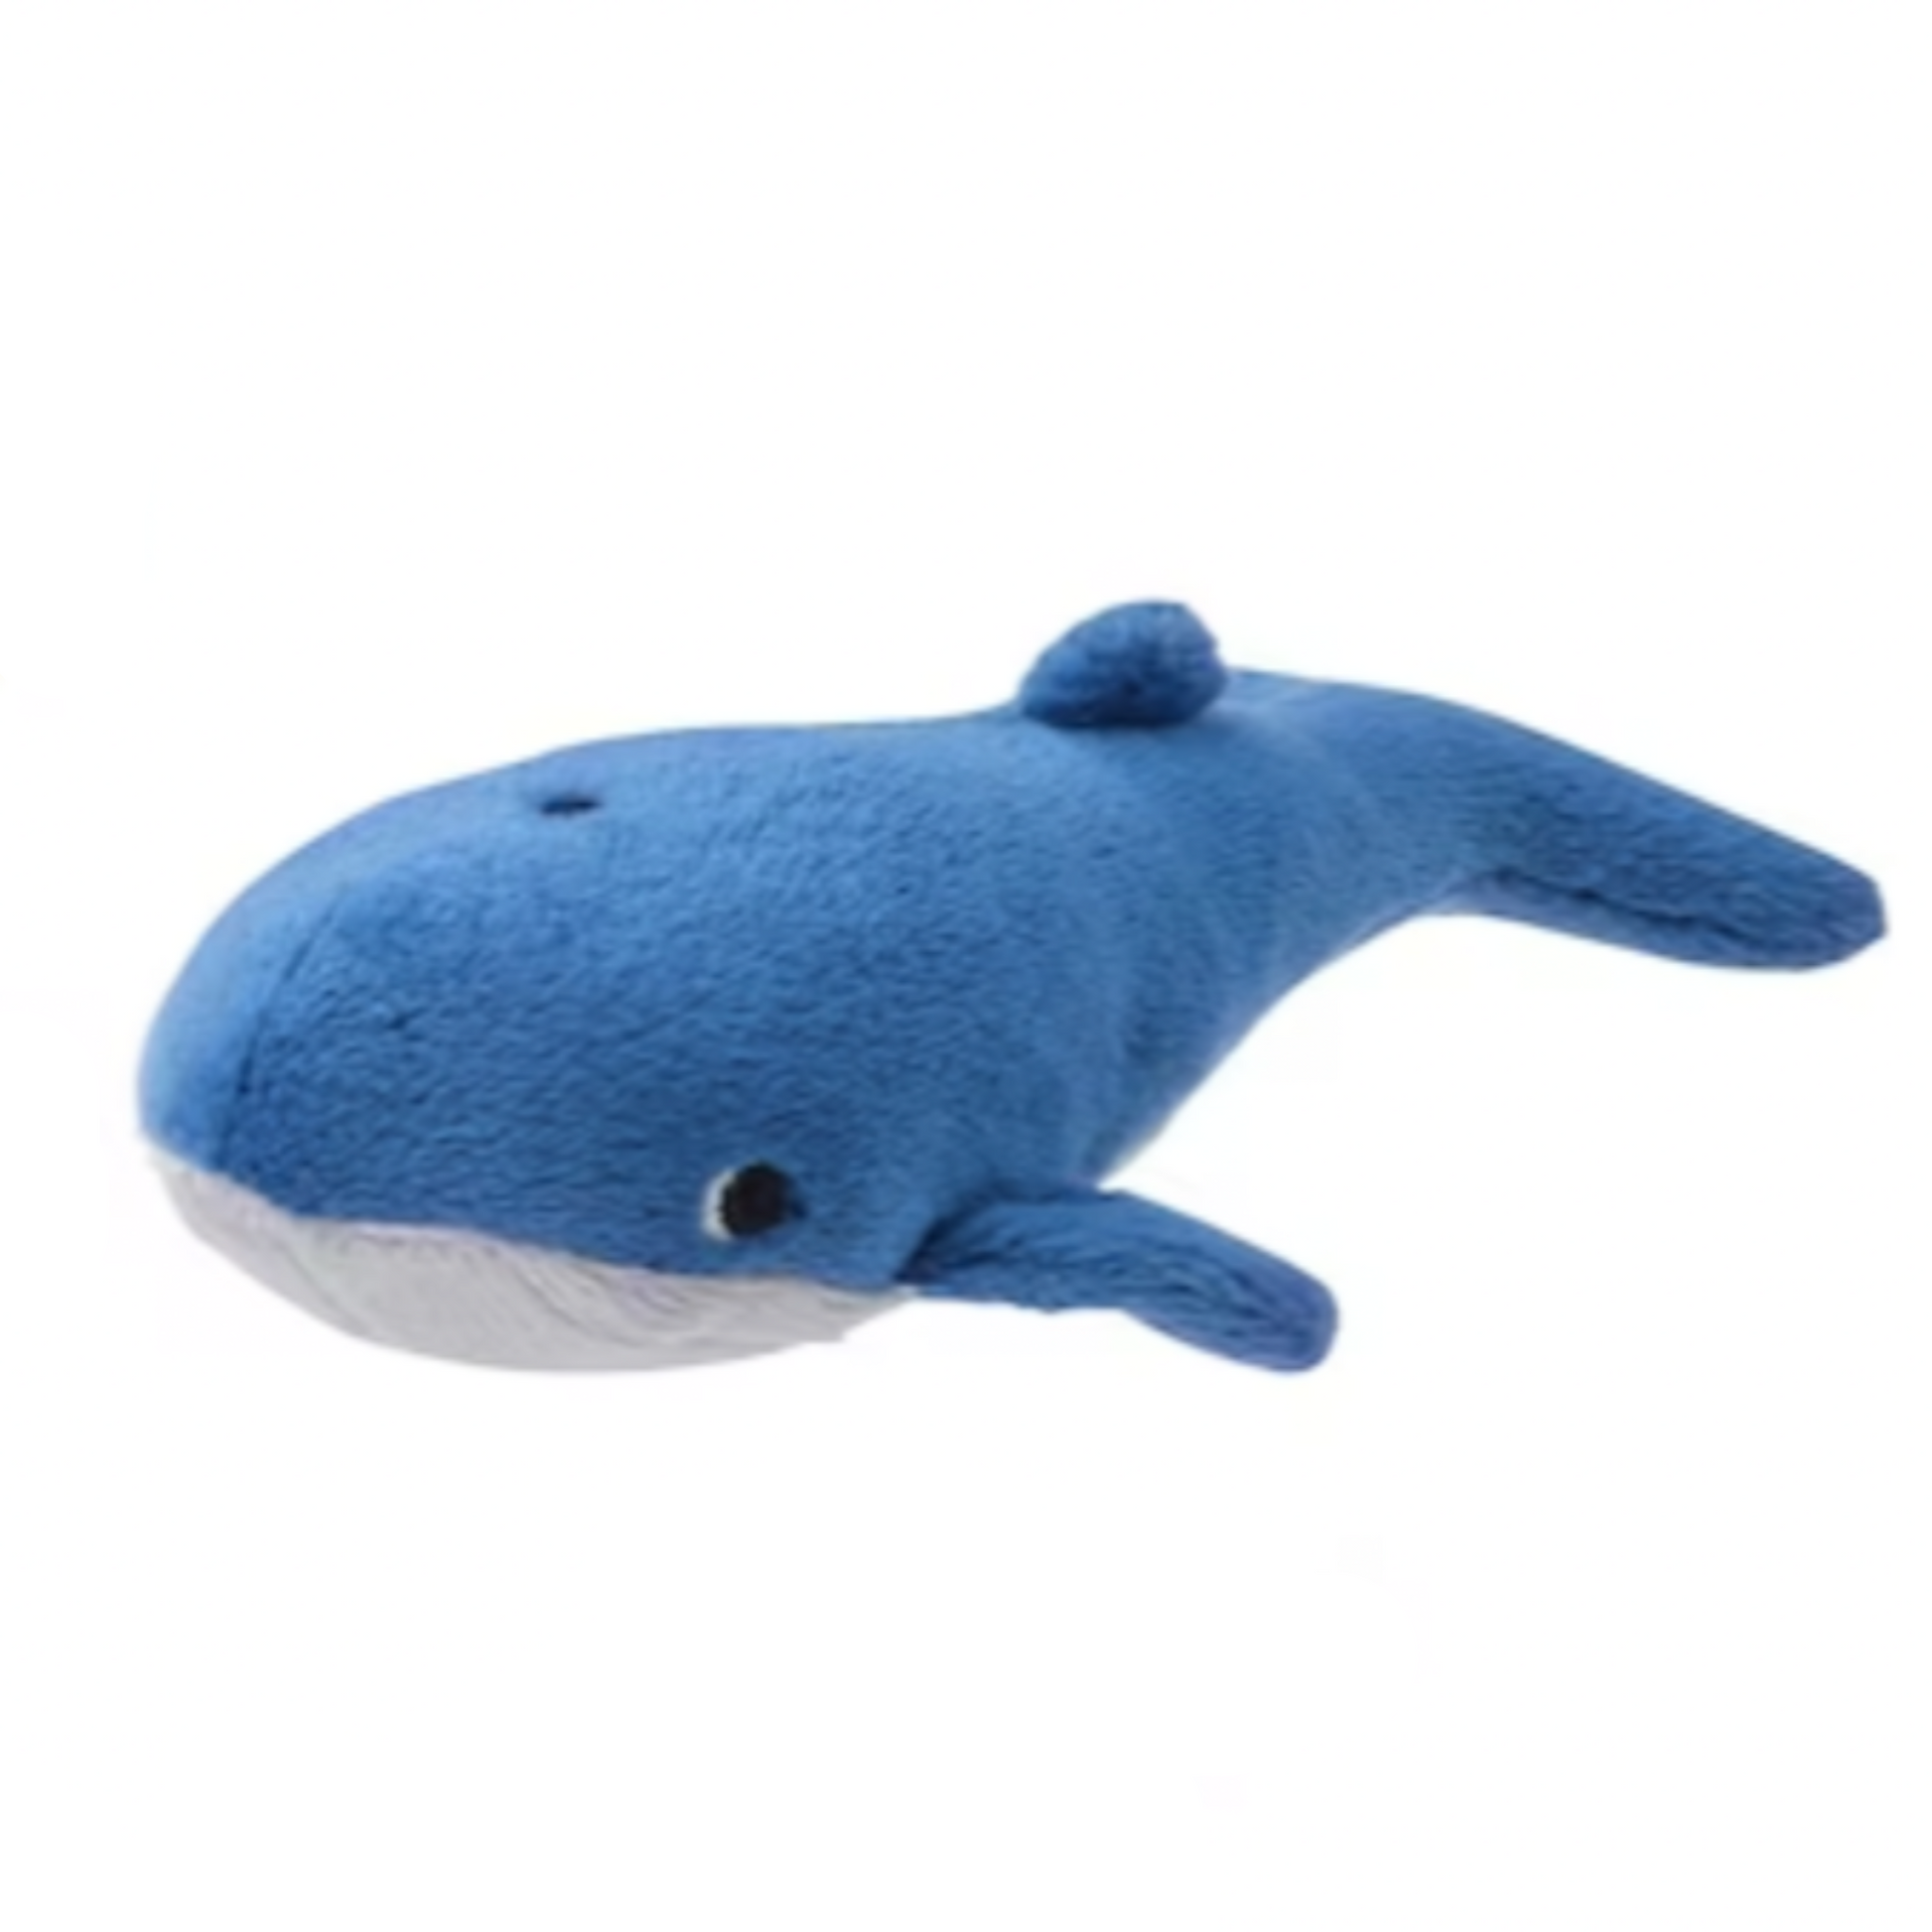 Ikea Blavingad Blue Whale Mini Soft Toy, 13cm (8016645226783)